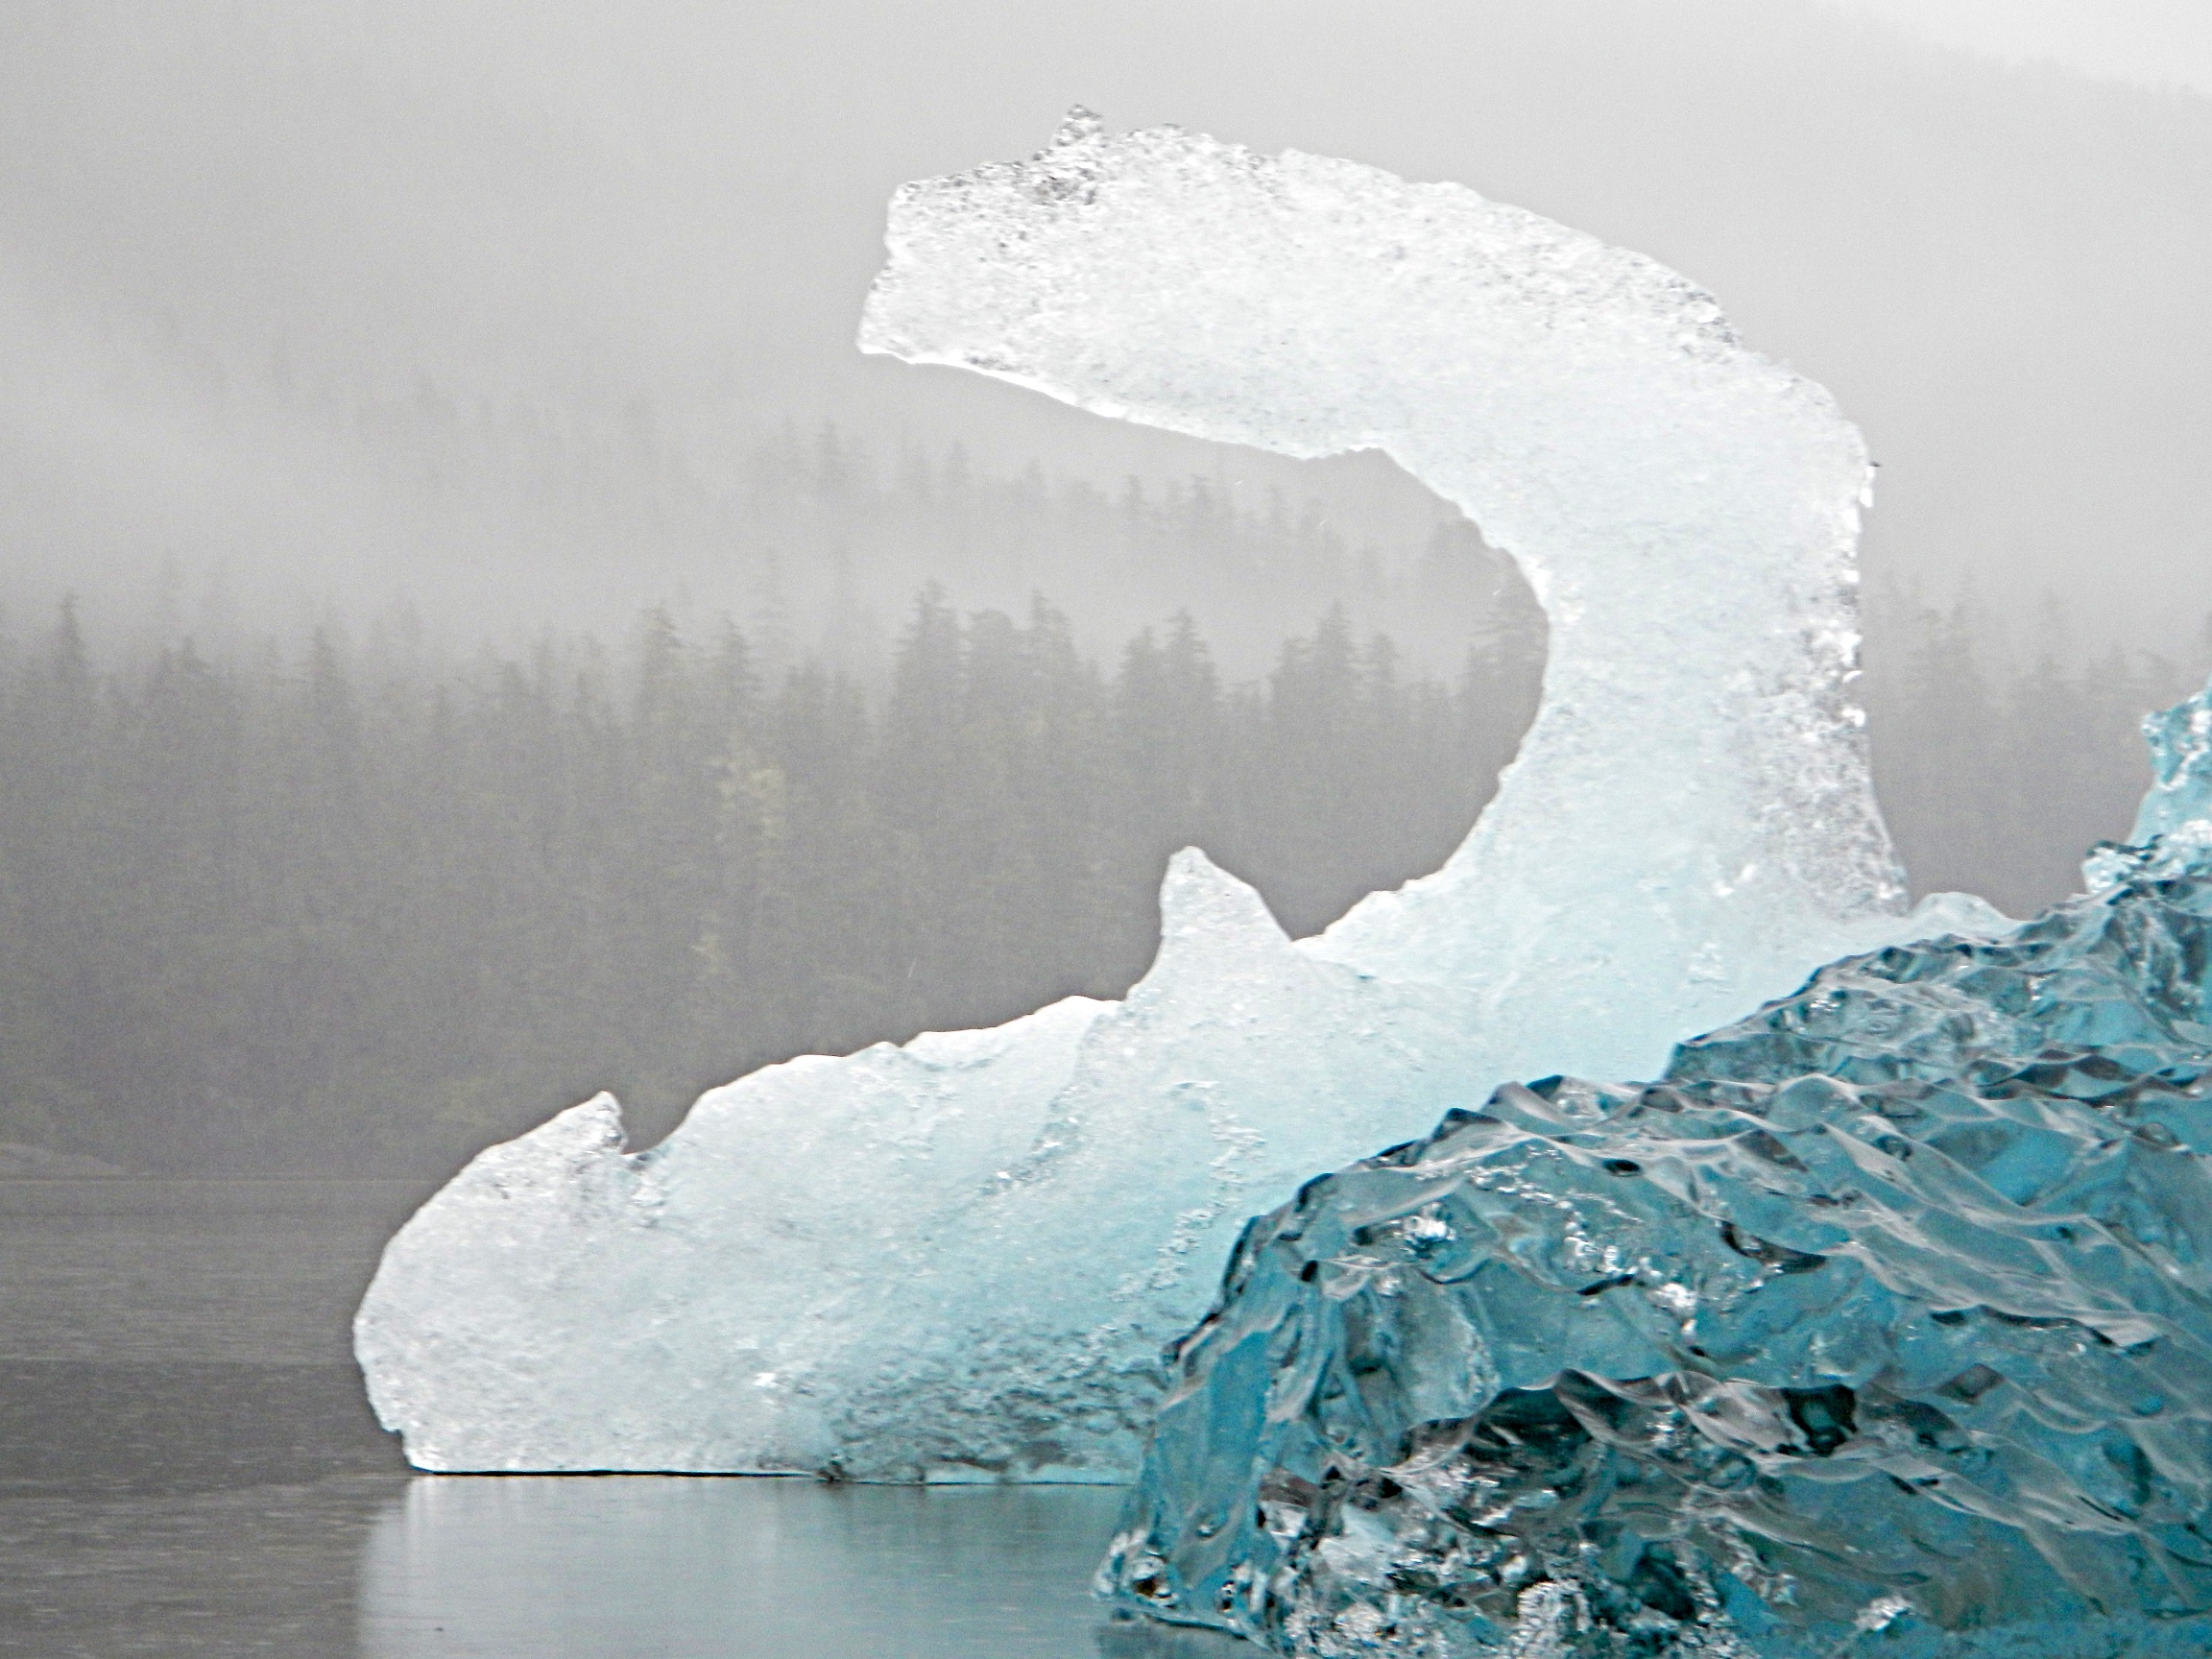  Iceberg from kayak, Williams Cove, Alaska 